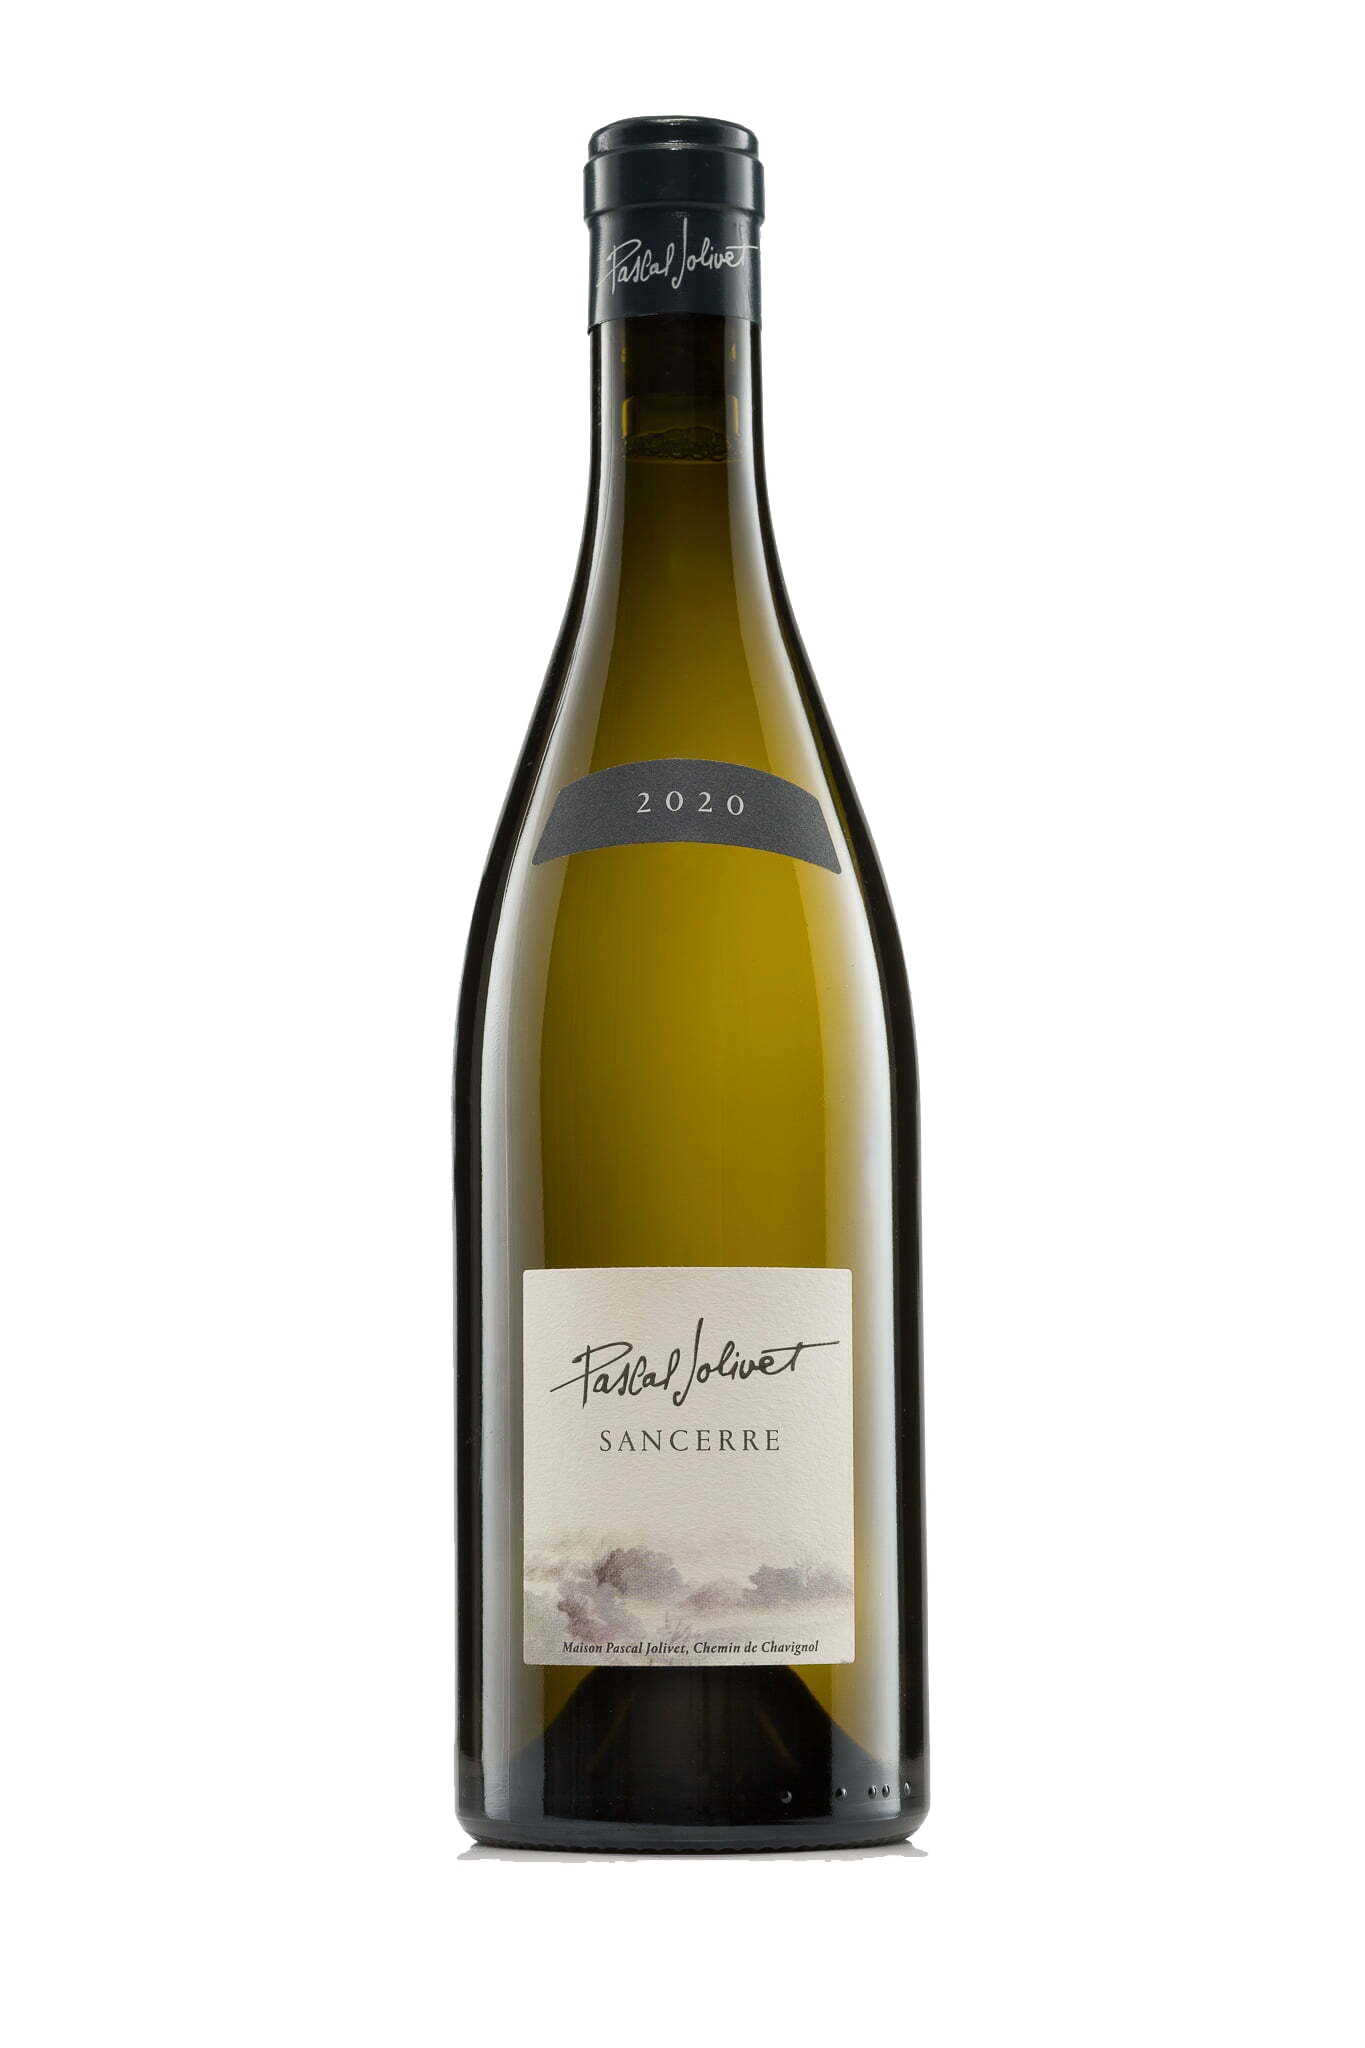 Pascal отзывы. Pascal Jolivet вино. Sancerre вино белое 2019. Pouilly fume 2020 вино. Сансер Саваж вино белое.